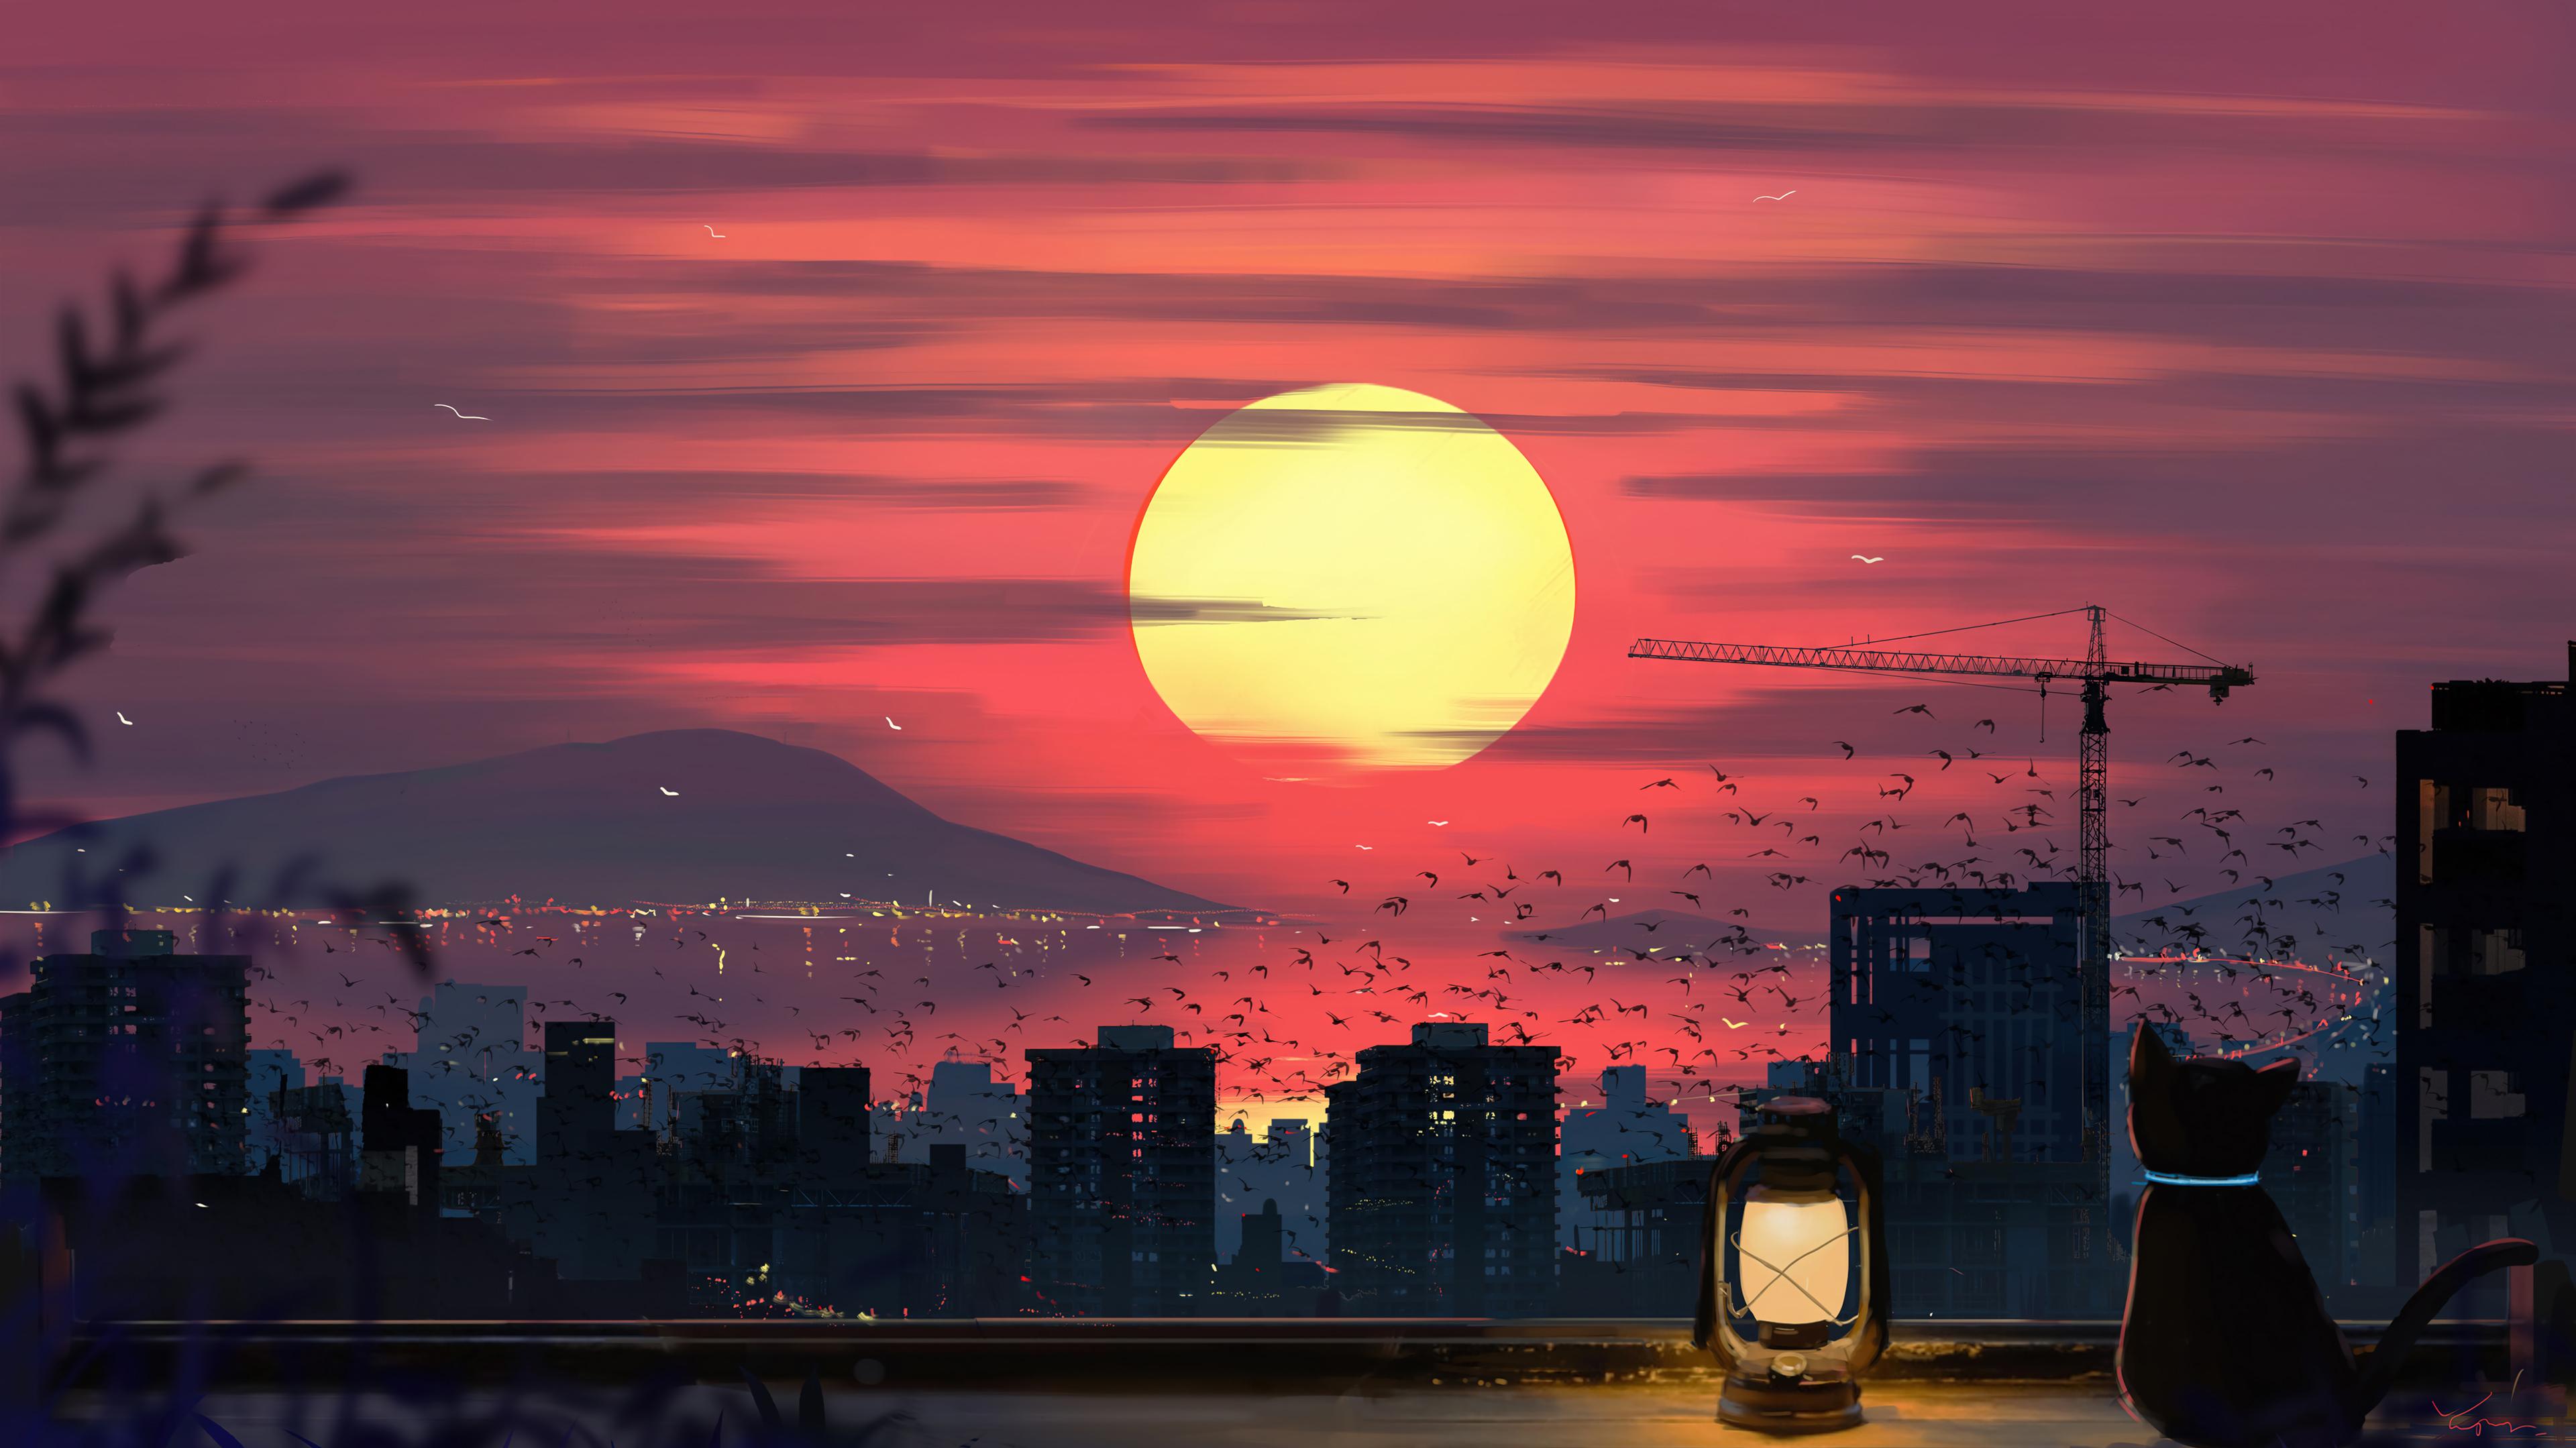 35+] Anime Sunset 4K Vertical Wallpapers - WallpaperSafari